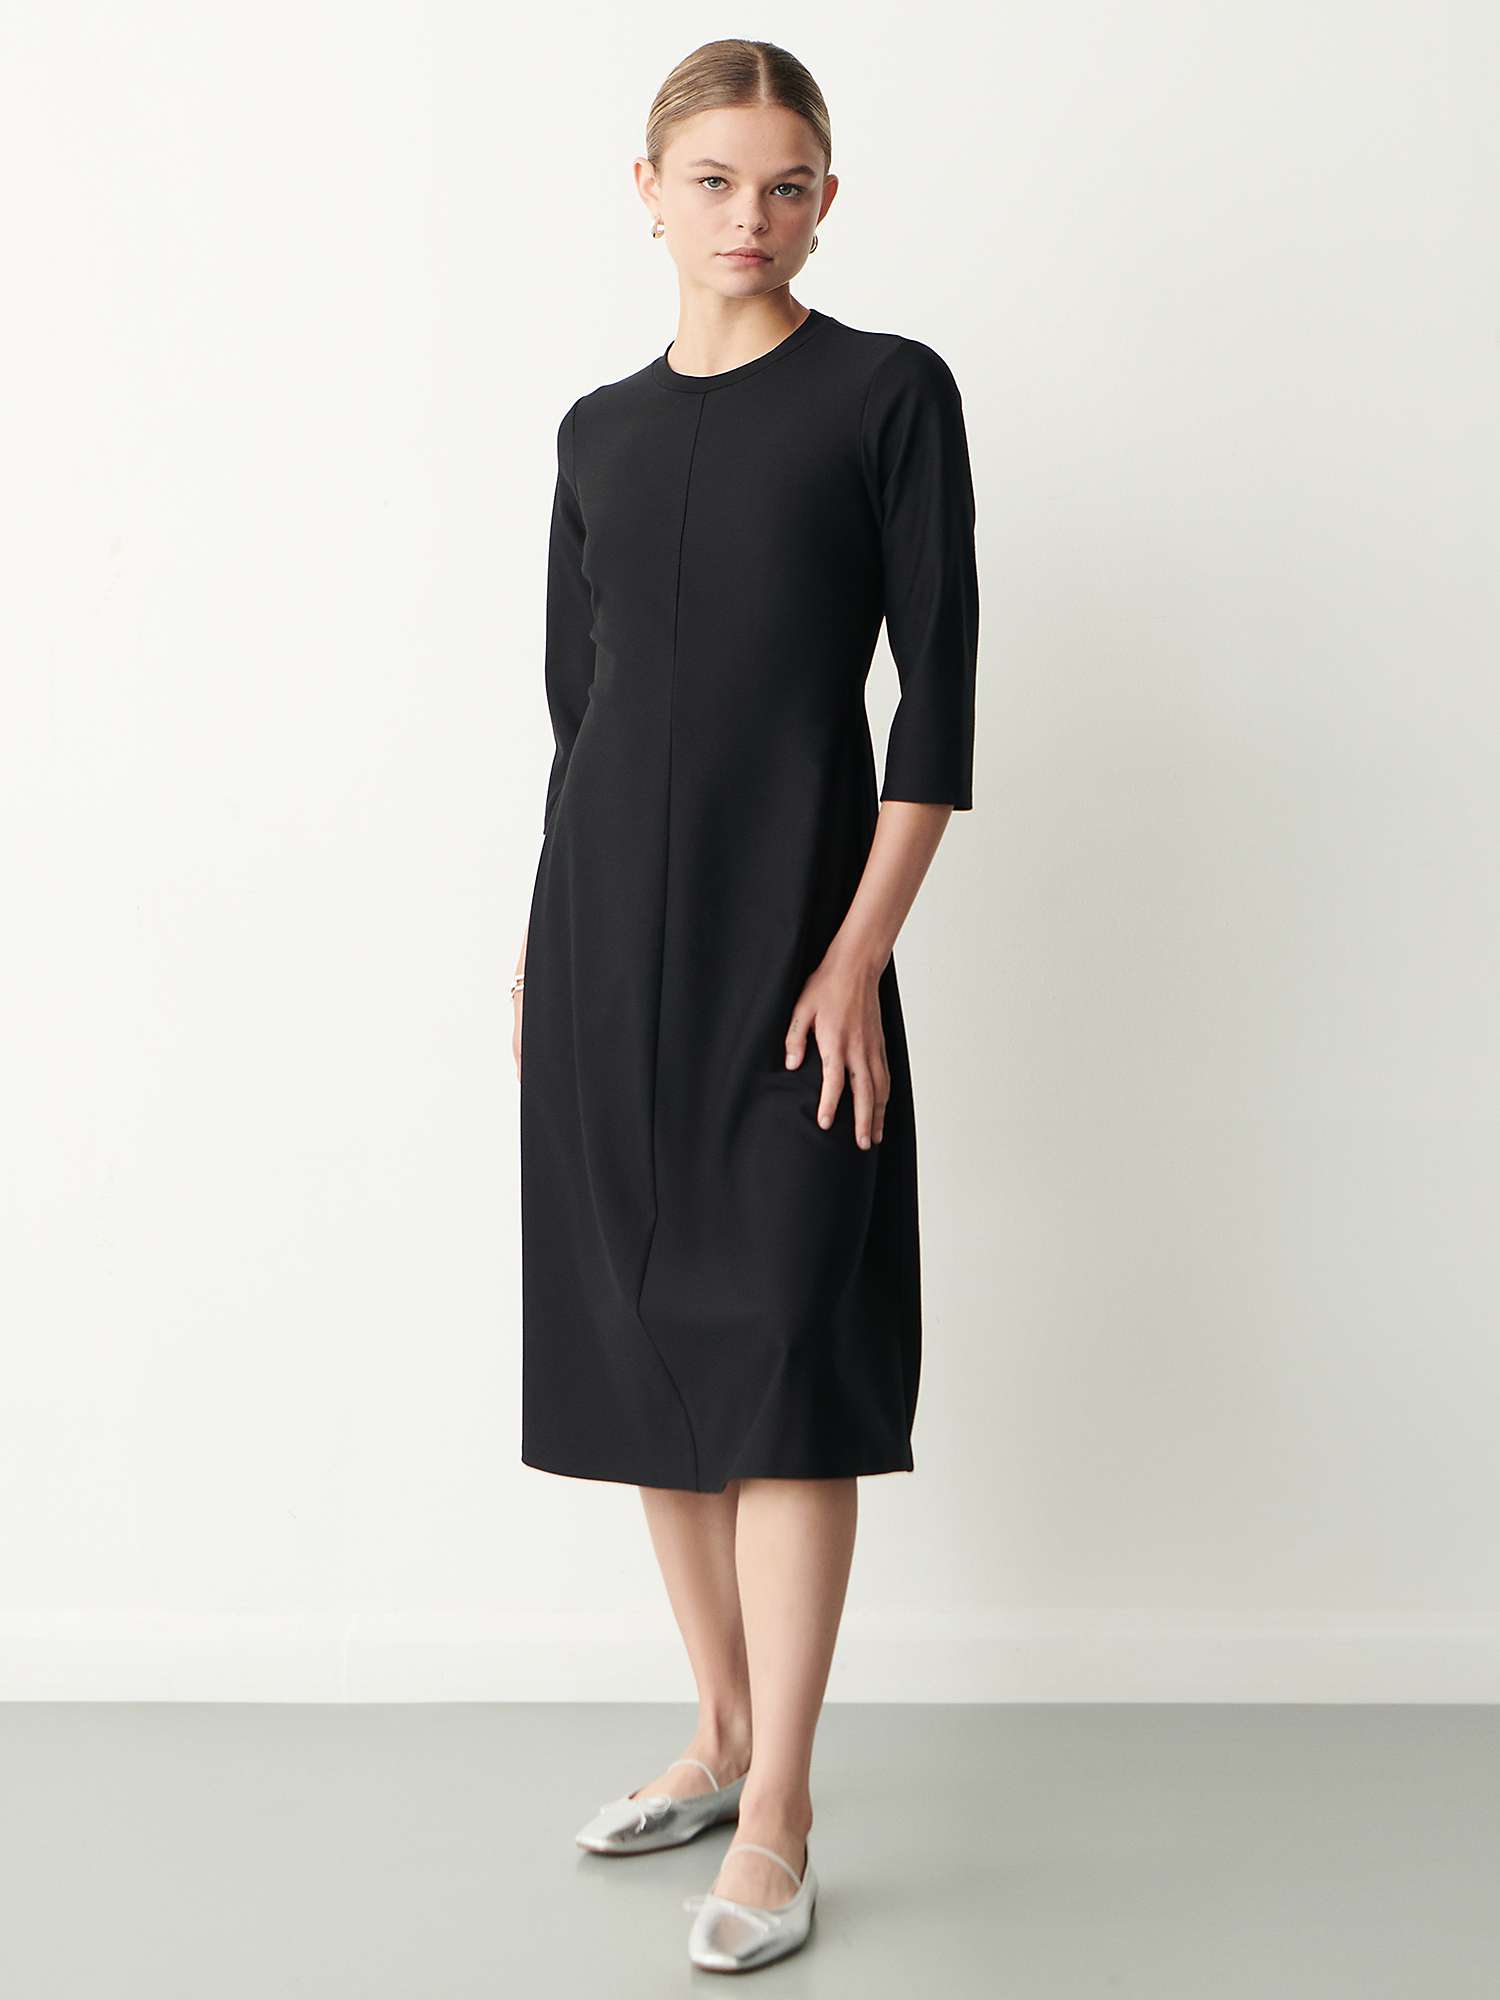 Finery Hazel Midi Dress, Black at John Lewis & Partners